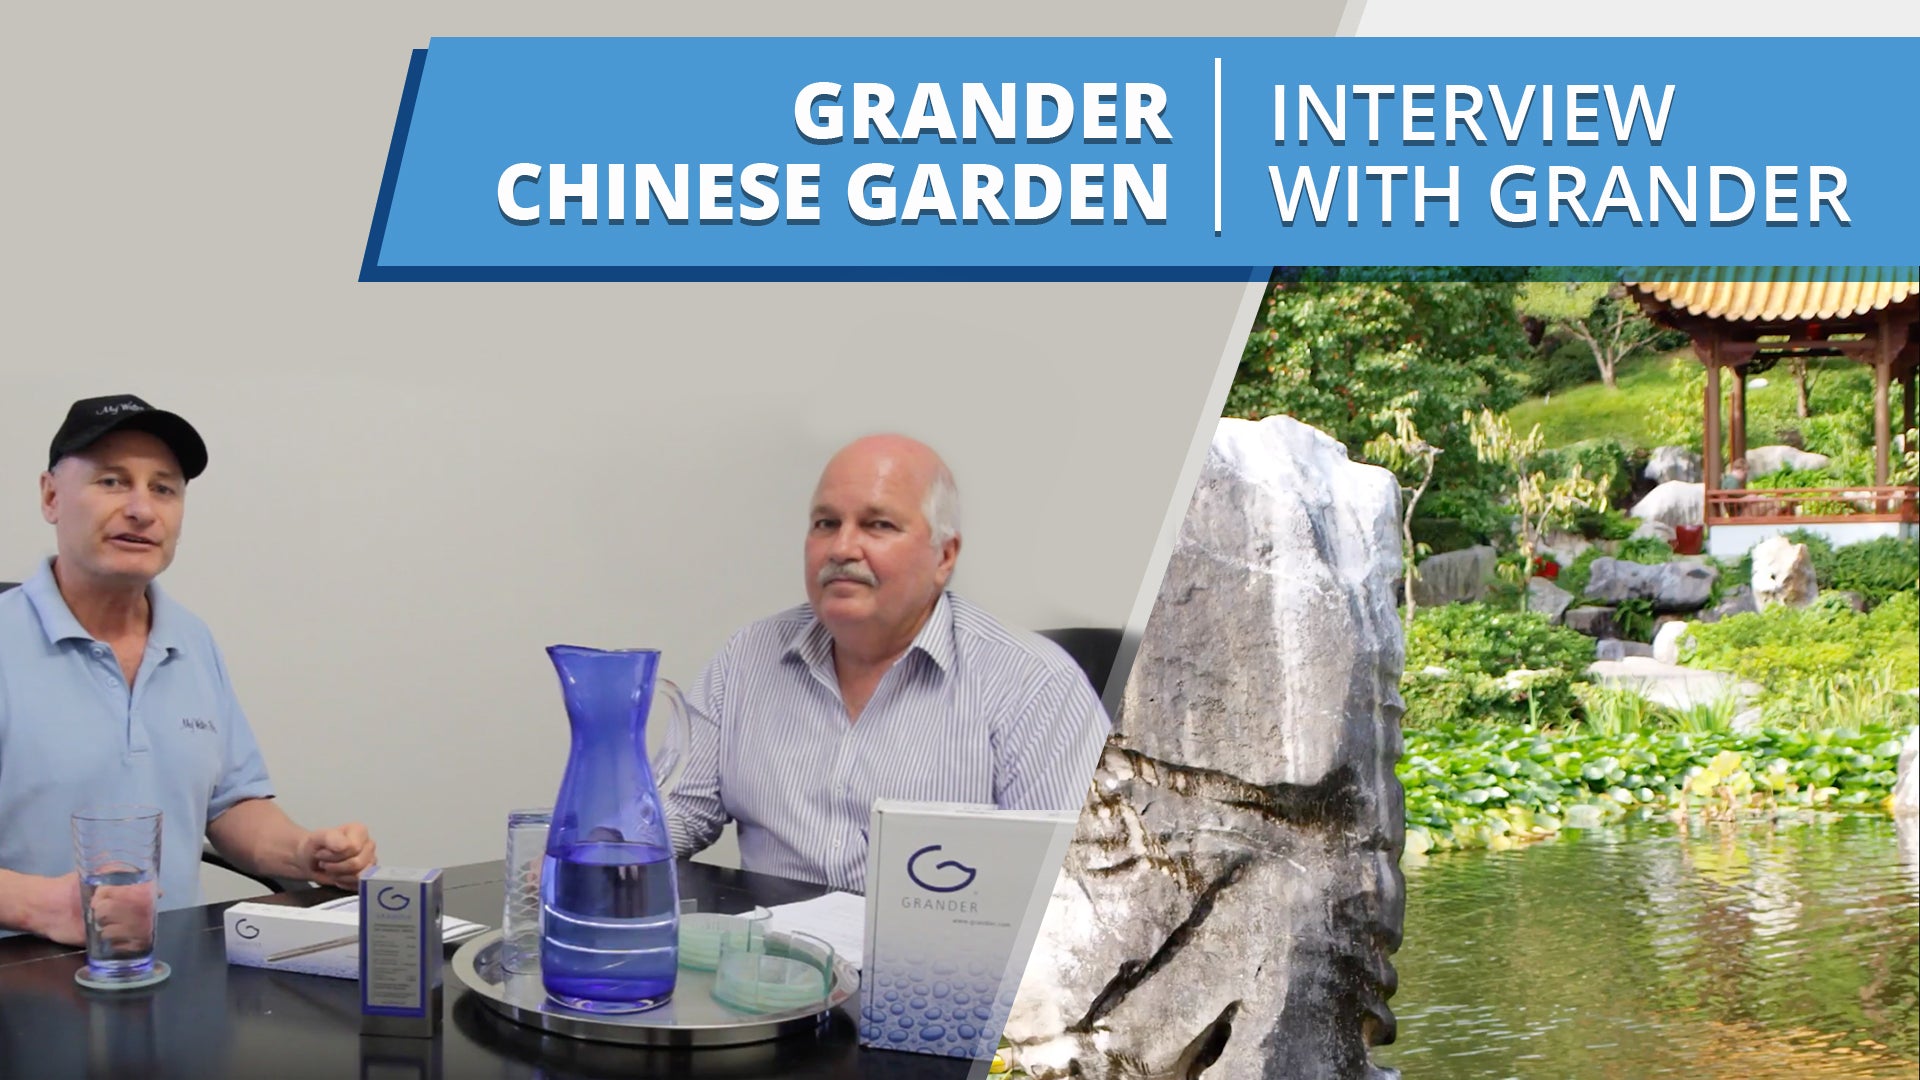 [VIDEO] Grander Chinese Garden Interview - Interview with Wayne from Grander